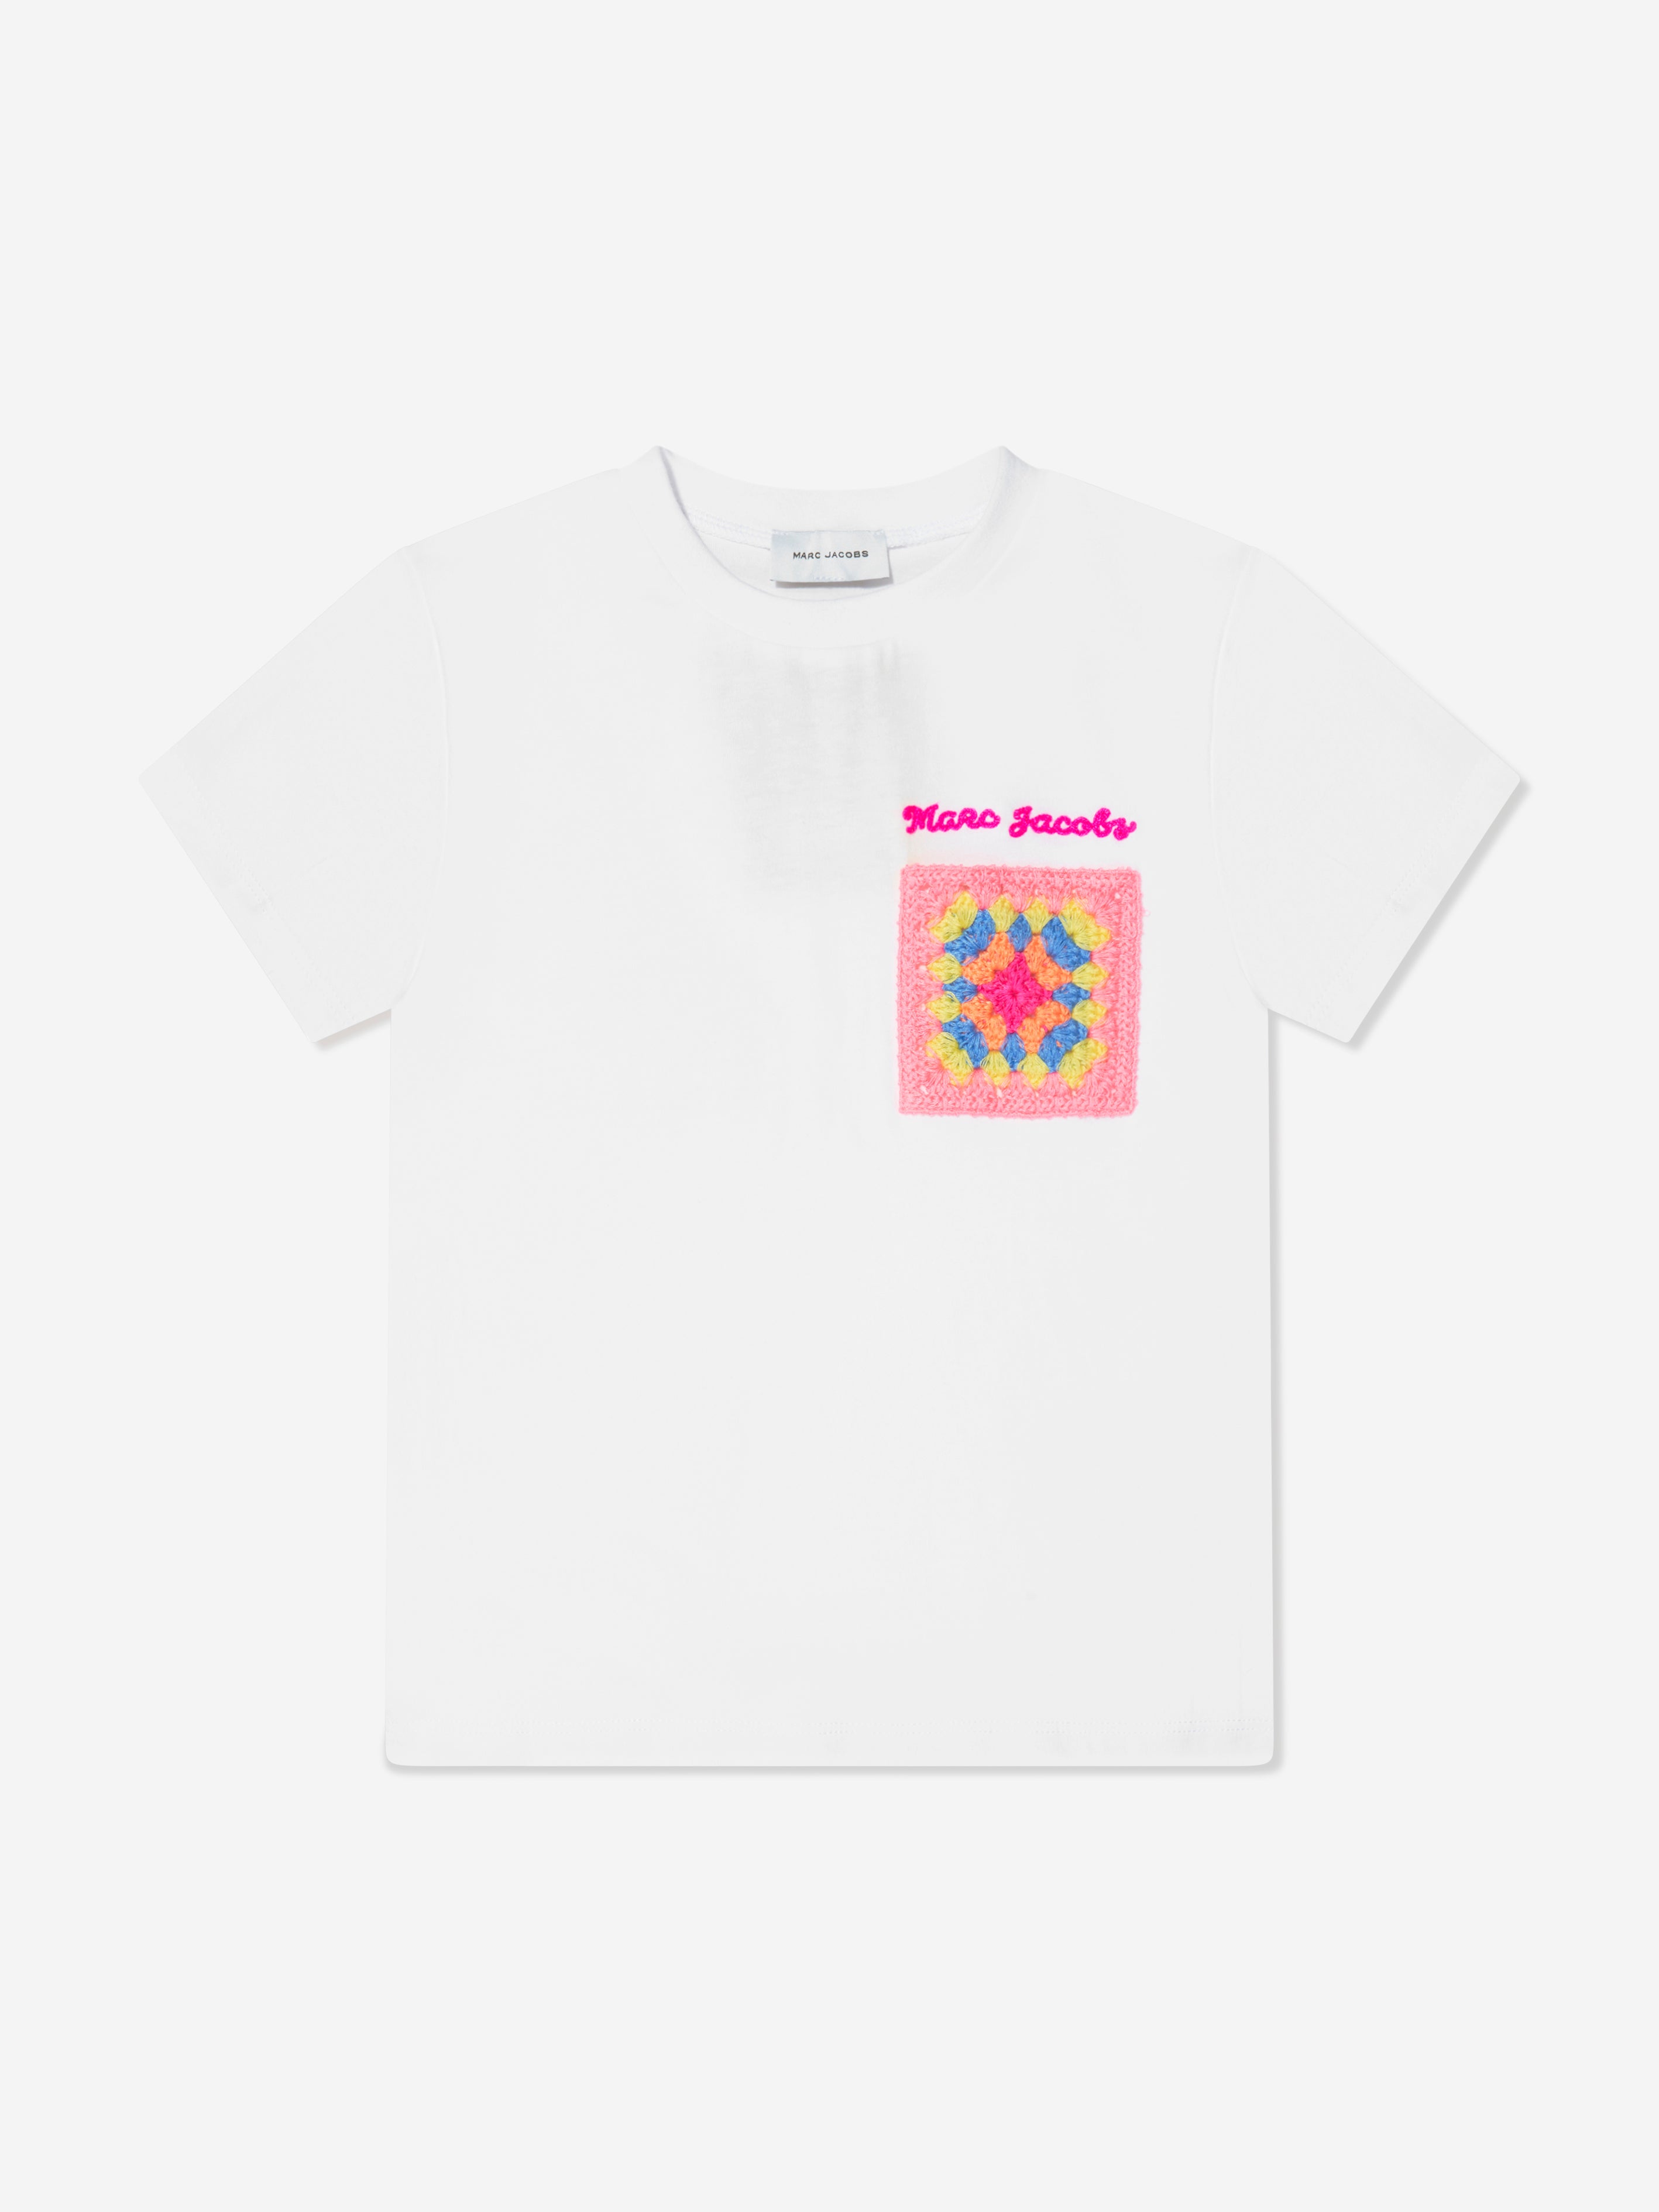 Marc Jacobs Women's Logo Print T-Shirt